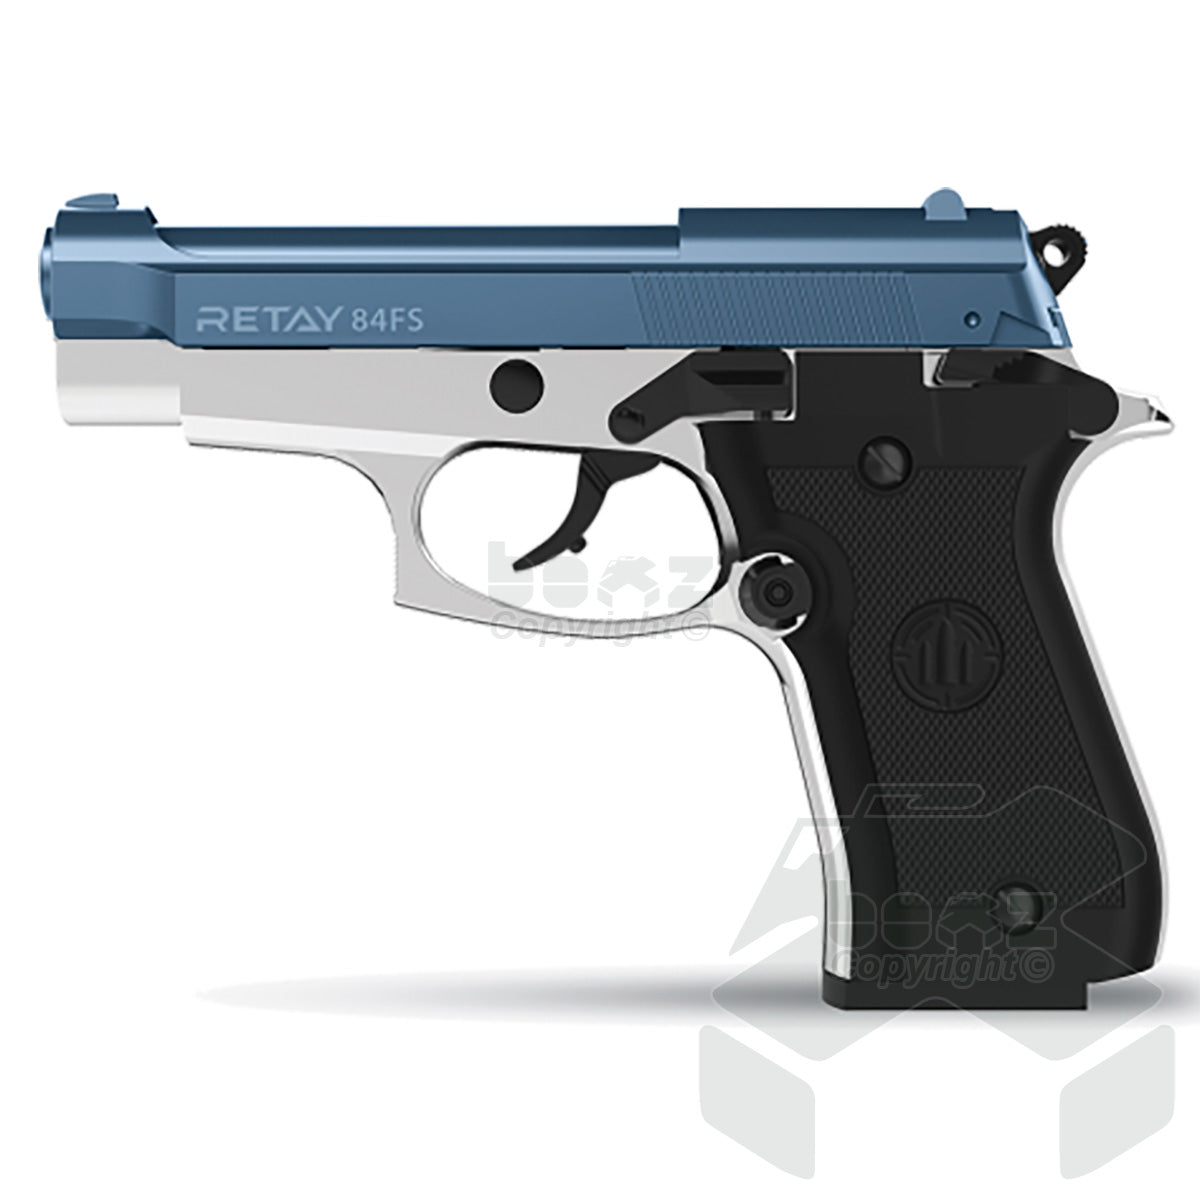 Retay 84 FS Blank Firing Pistol - 9mm - Chrome